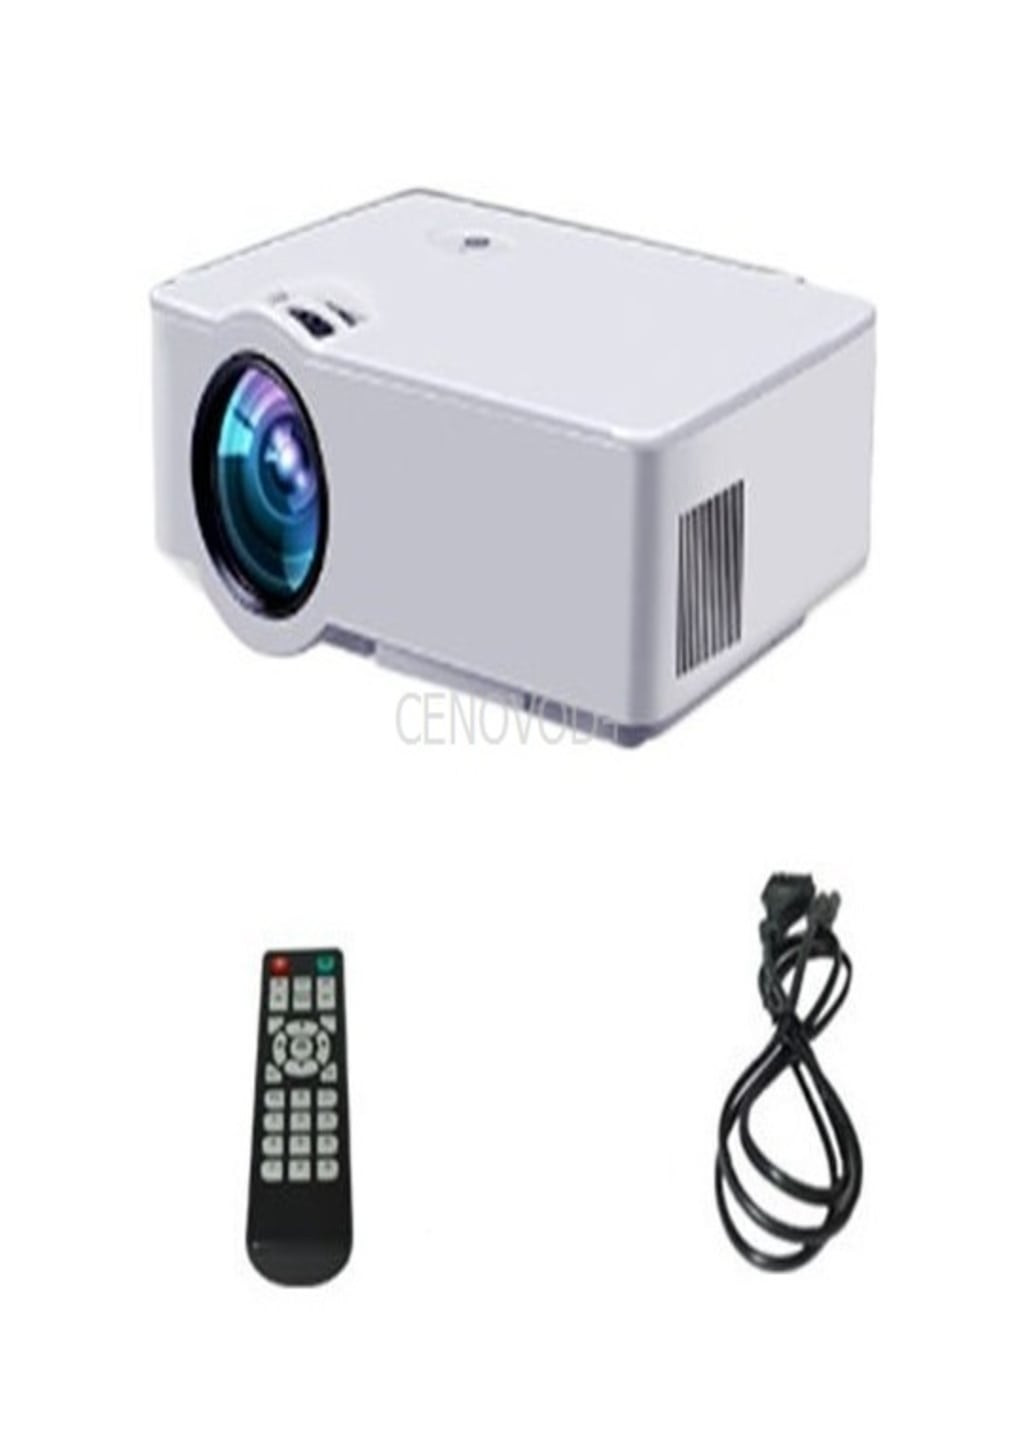 Портативный проектор Projector LED E08 (4412033) Francesco Marconi (215118324)